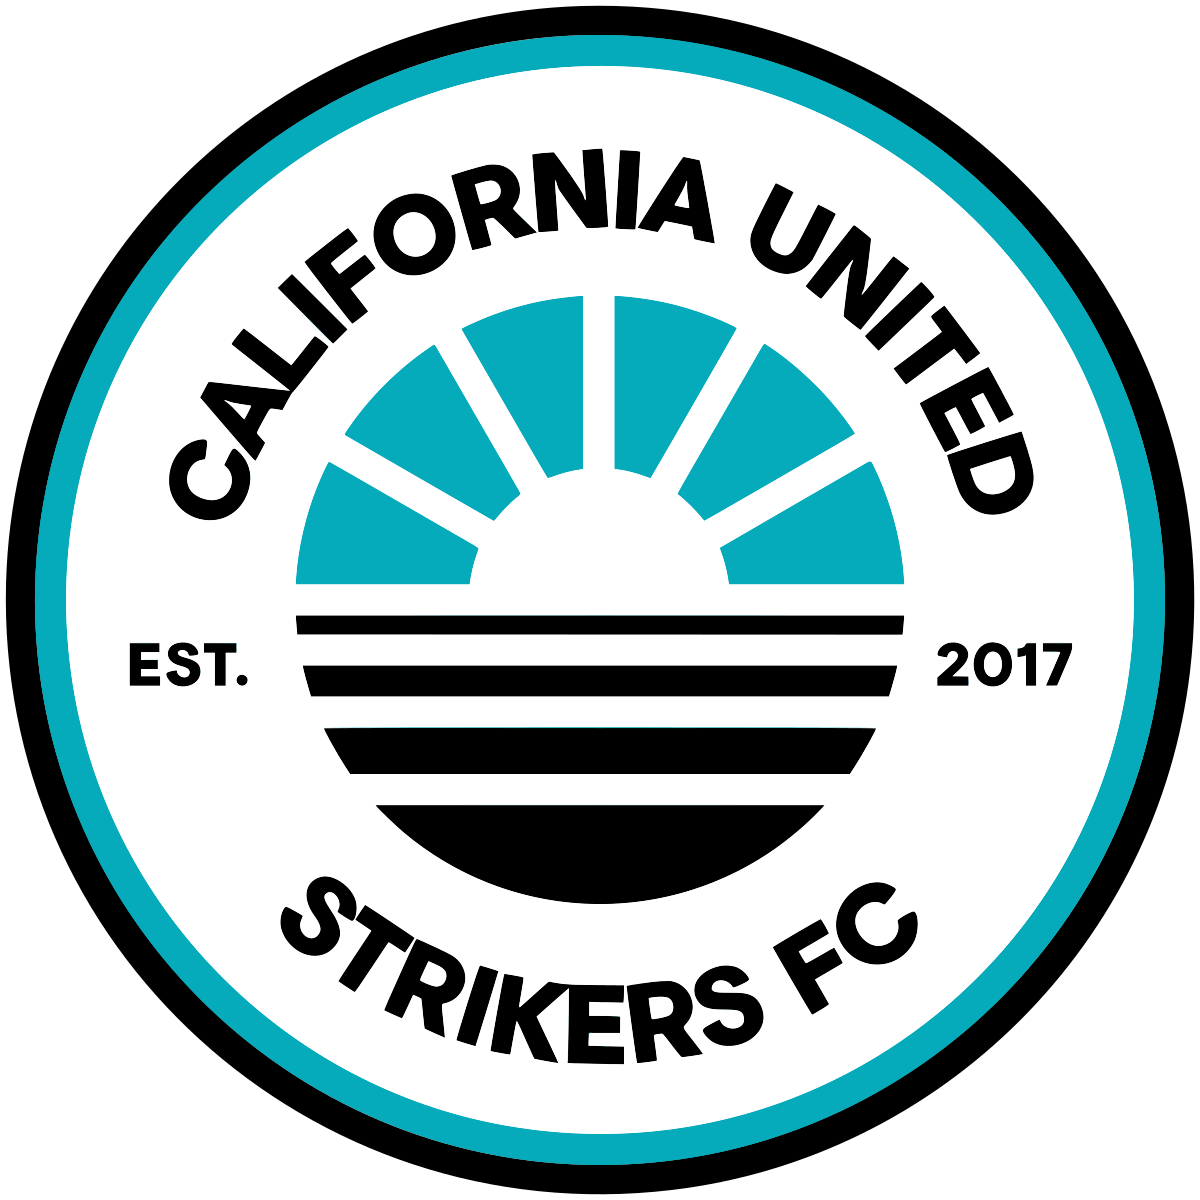 California Utd. logo